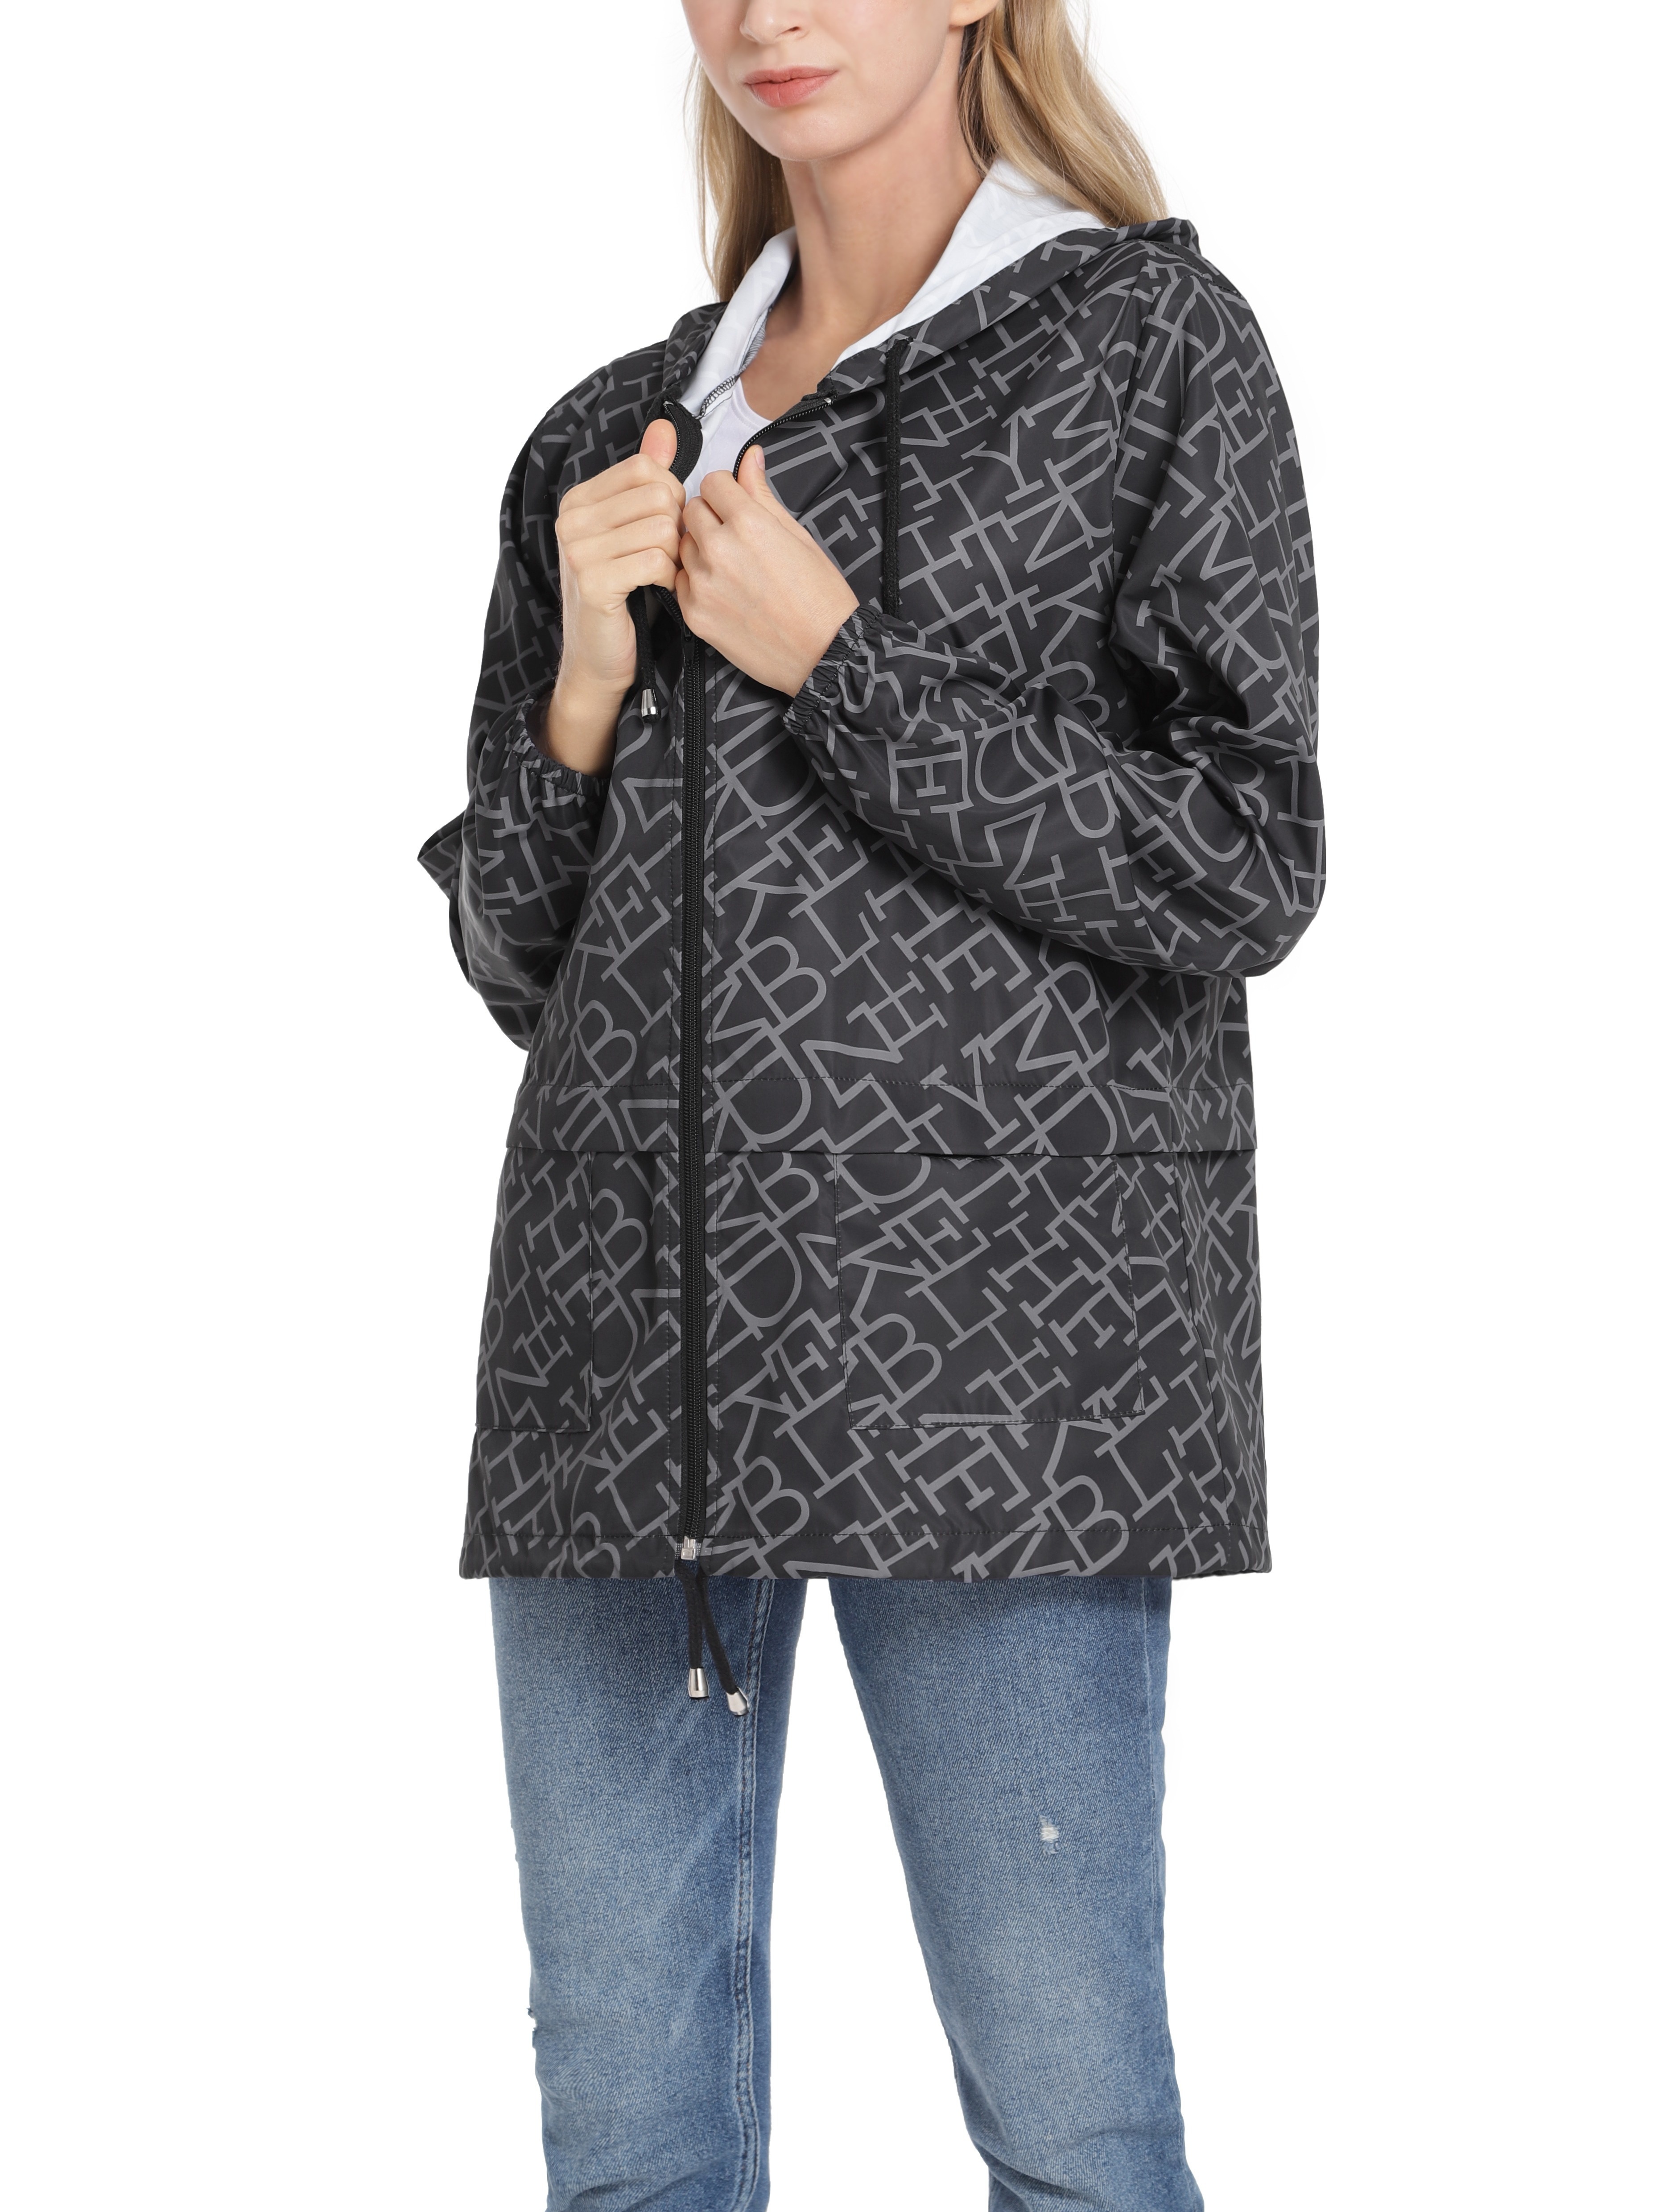 Chubasquero con capucha para mujer, resistente al viento, impermeable, con  bolsillos